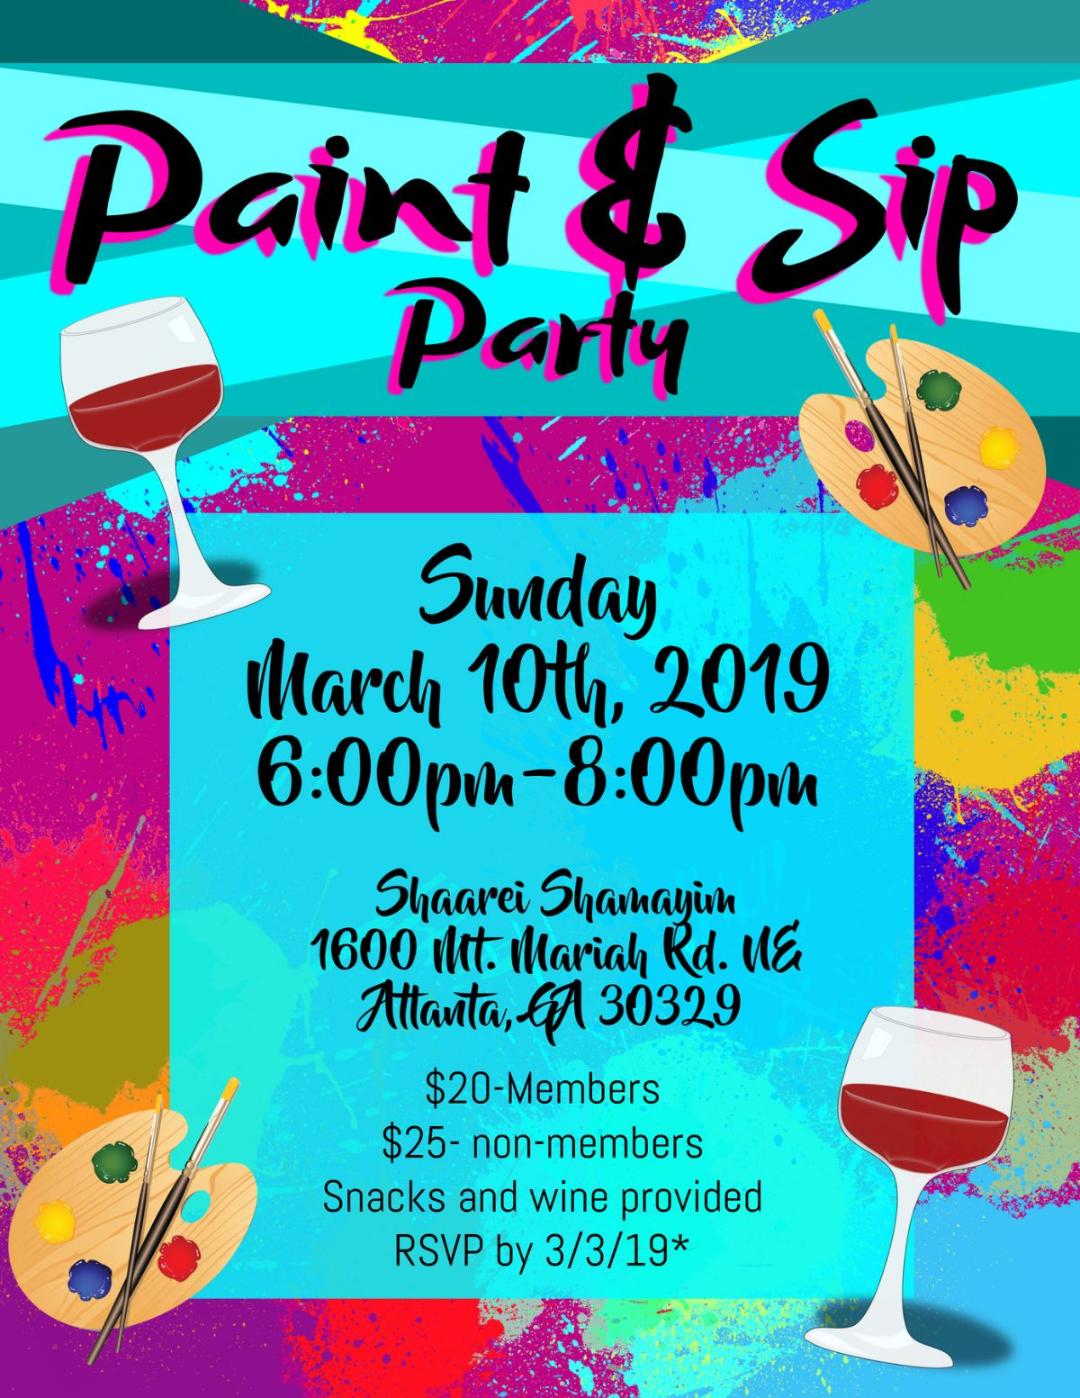 Paint and Sip Party 3/10/19 Atlanta Jewish Connector